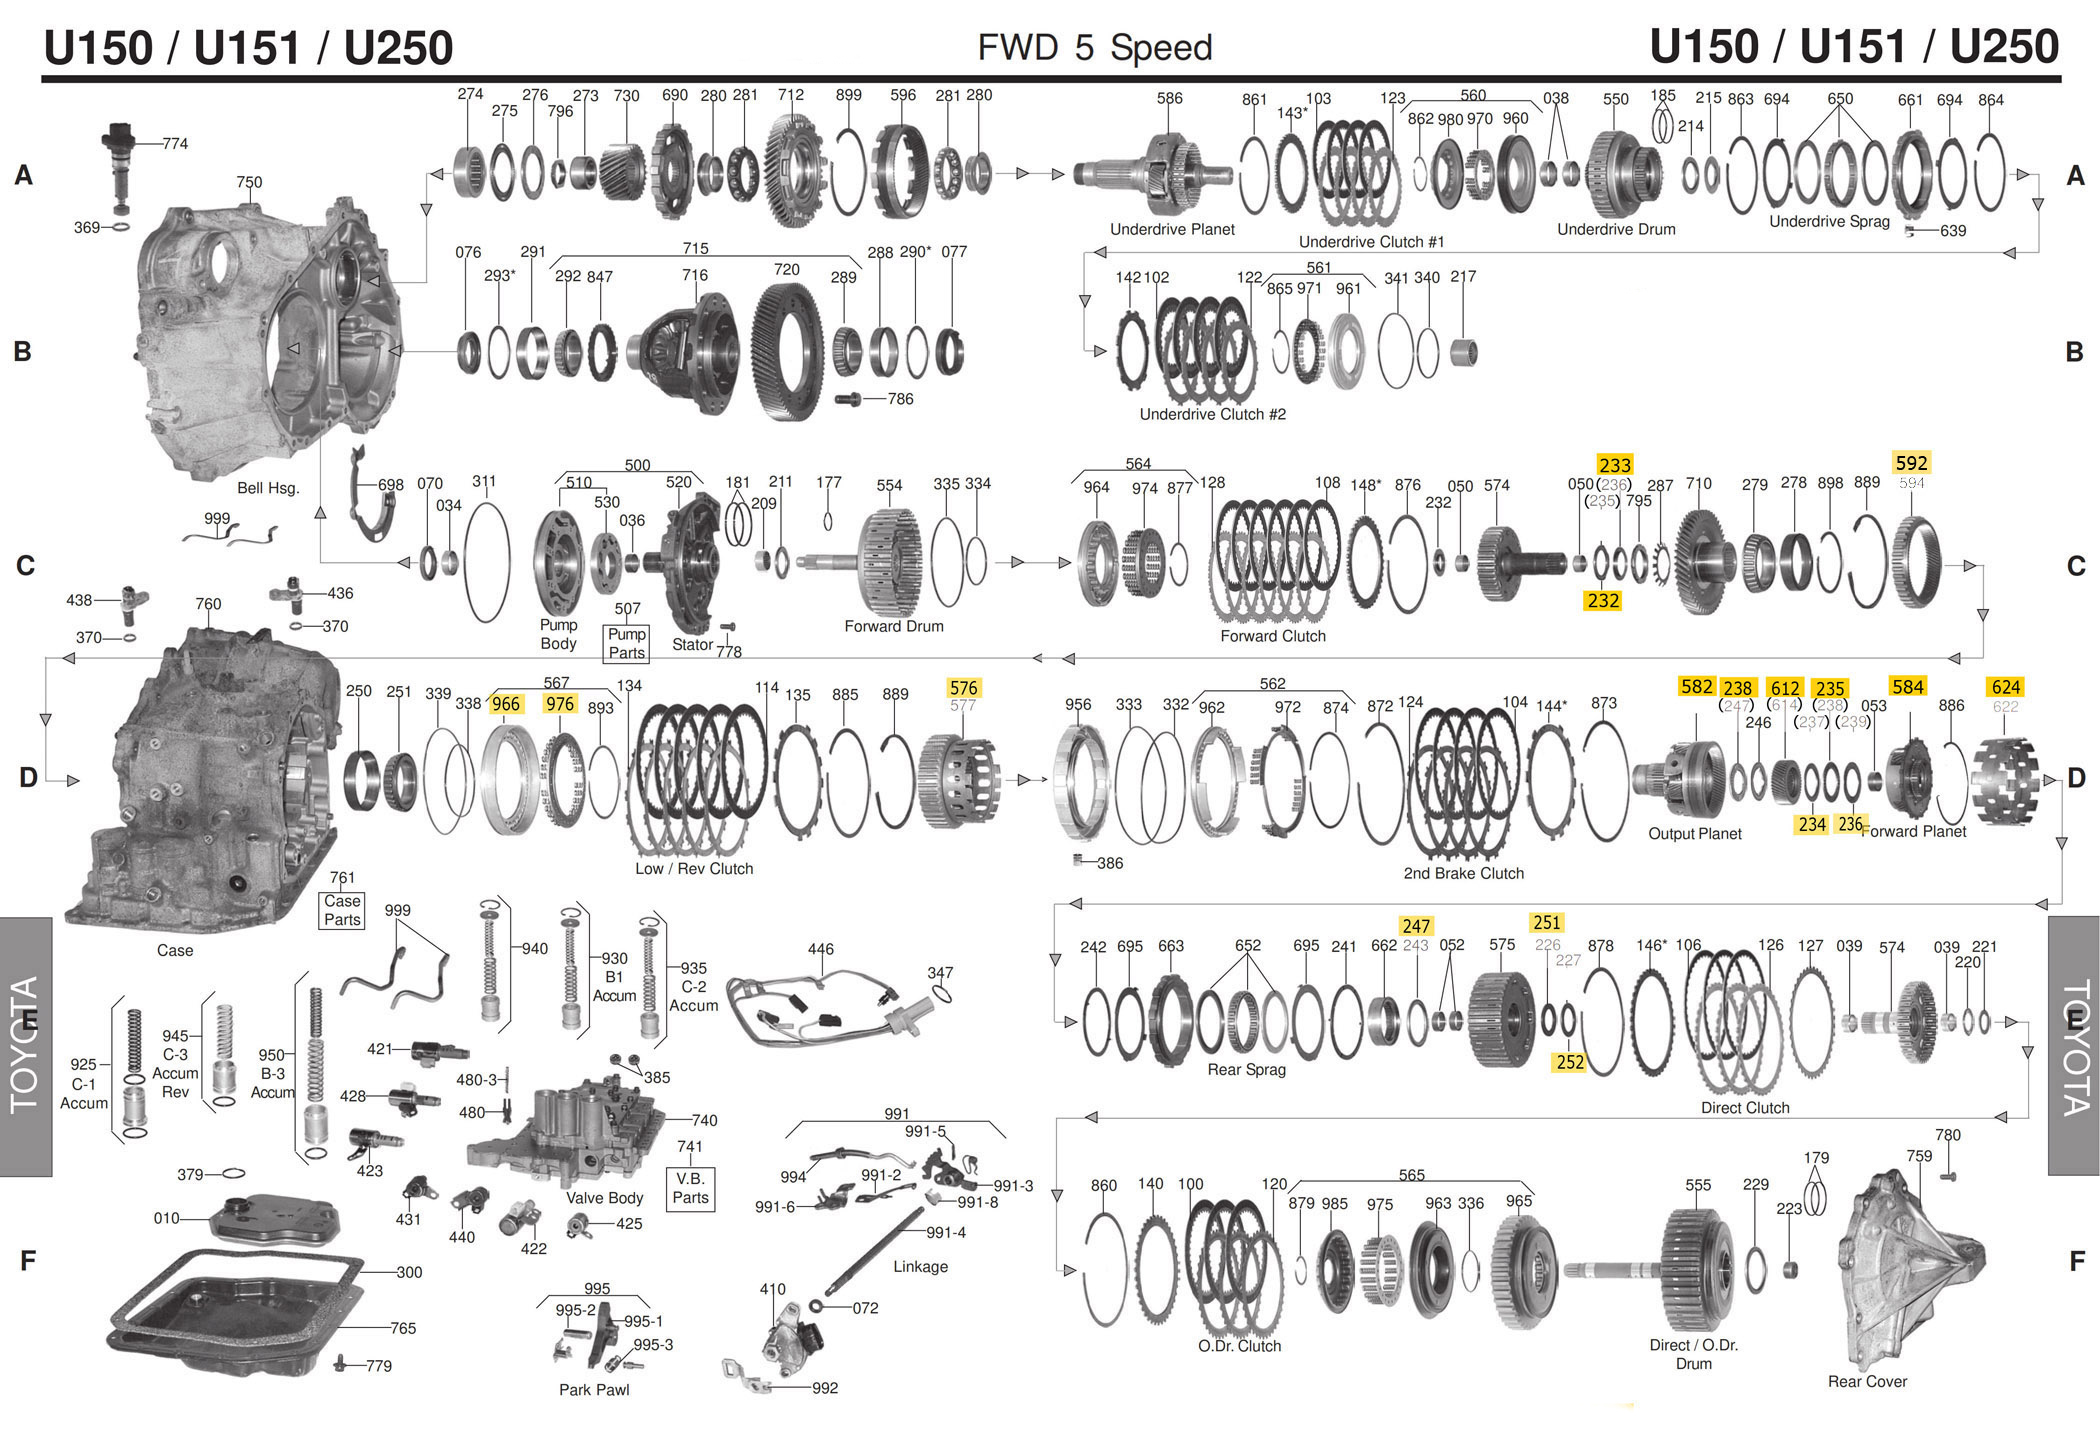 Transmission Repair Manuals U151 U250 Rebuild Instructions